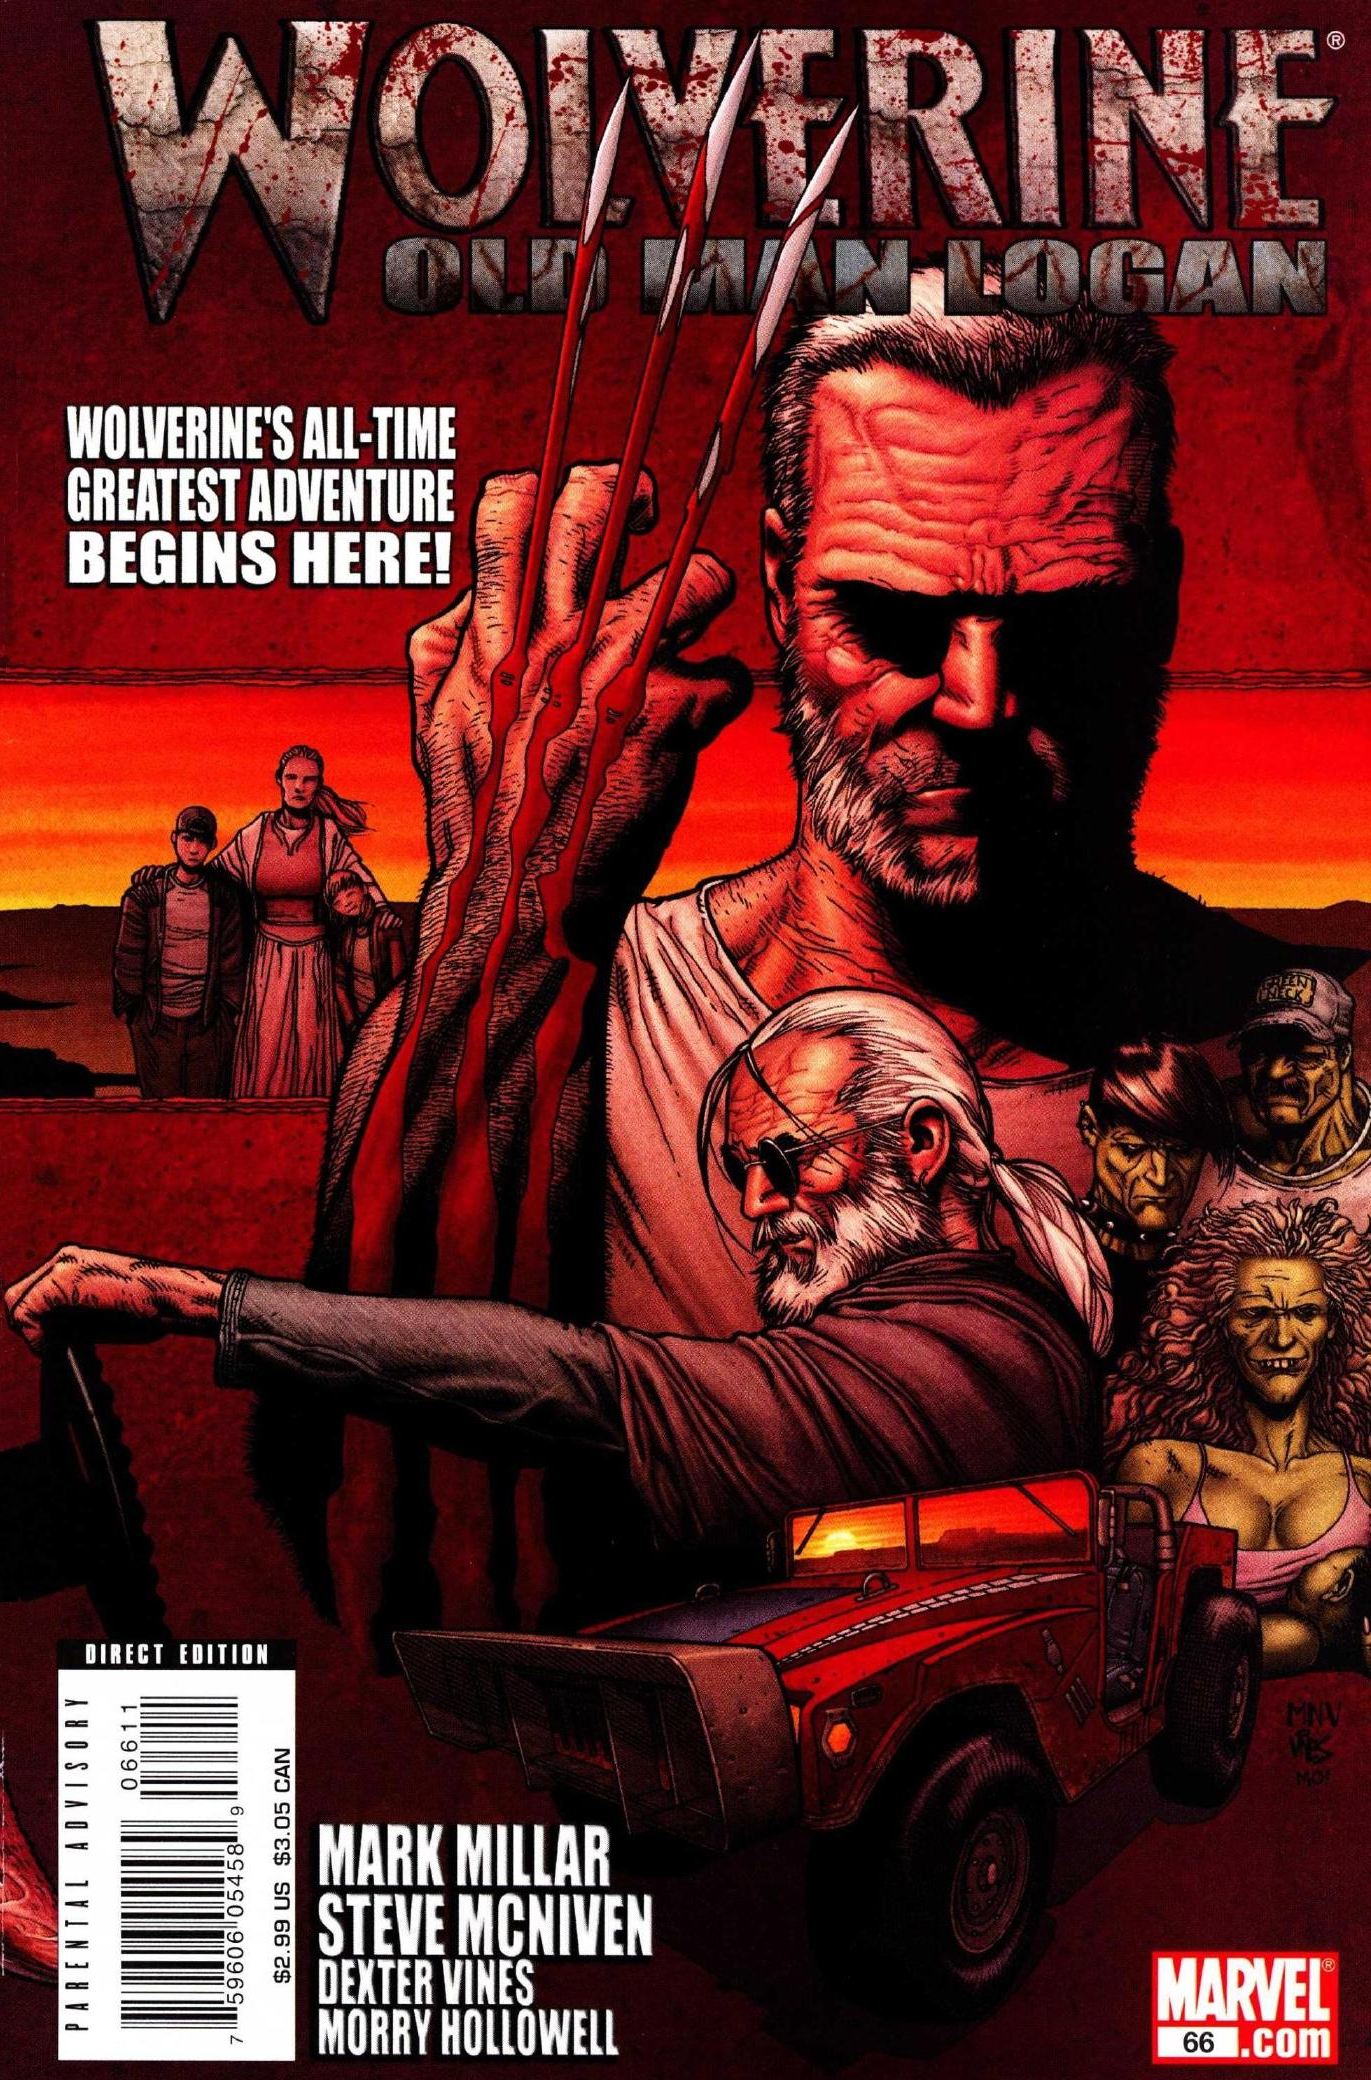 mark millar old man logan - Wowerine Can Logan Wolverine'S AllTime Greatest Adventure Begins Here! PIIR111 11111111 Mark Millar Steve Mcniven Dexter Vines Marvel Go.com